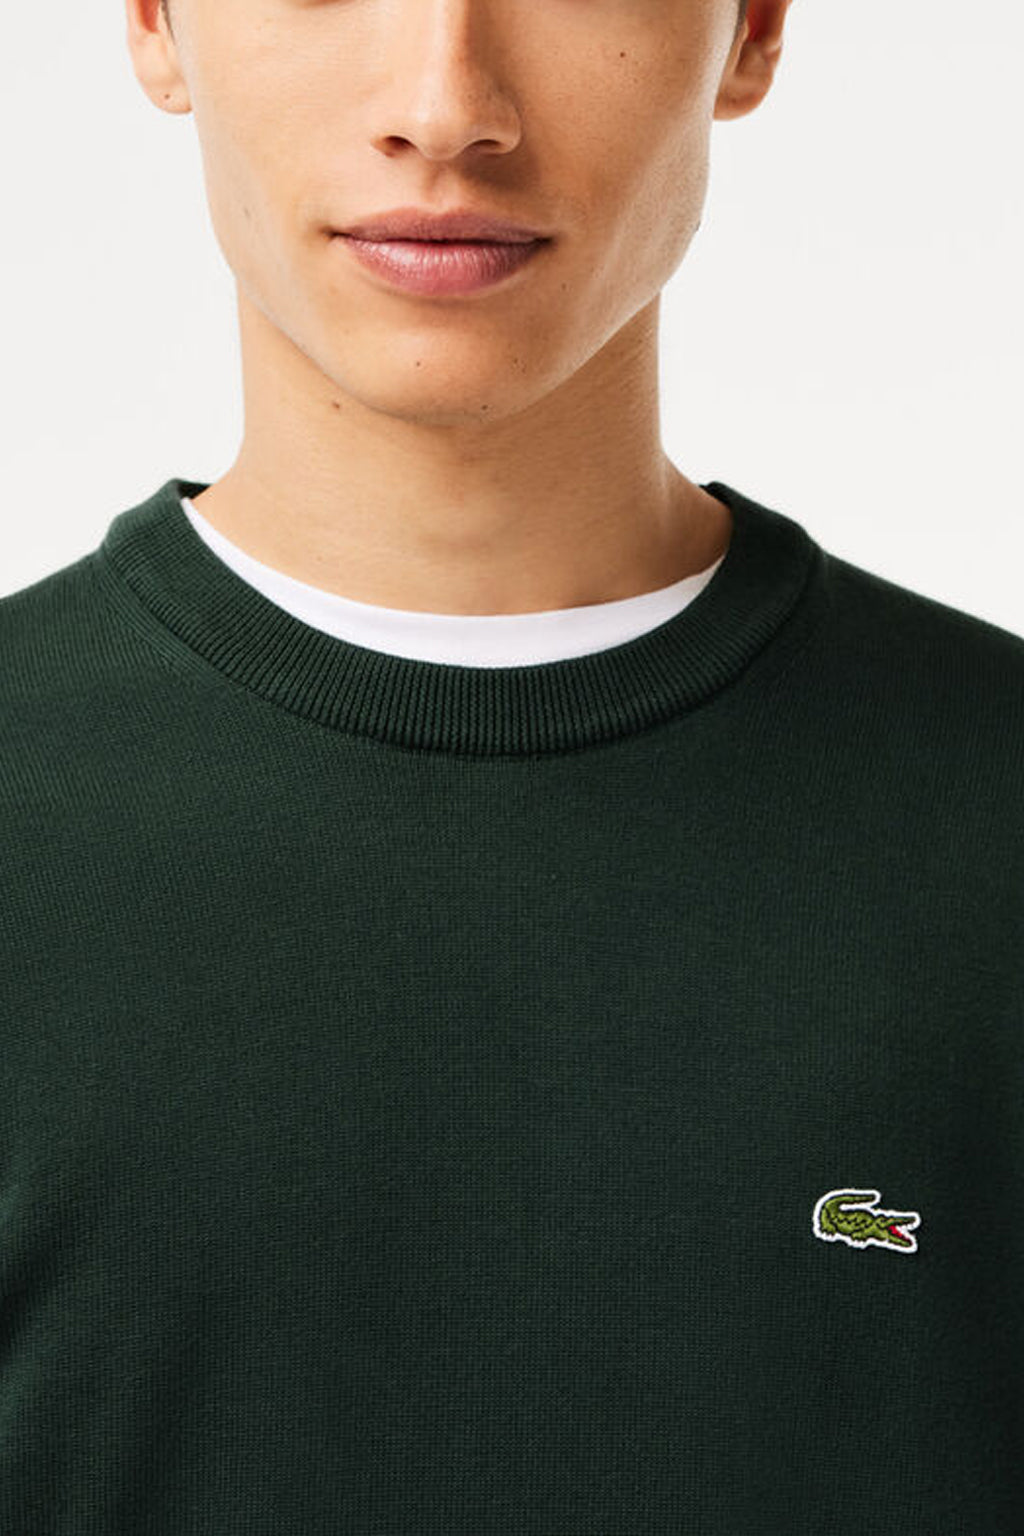 Lacoste - Organic Cotton Crew Neck Sweater